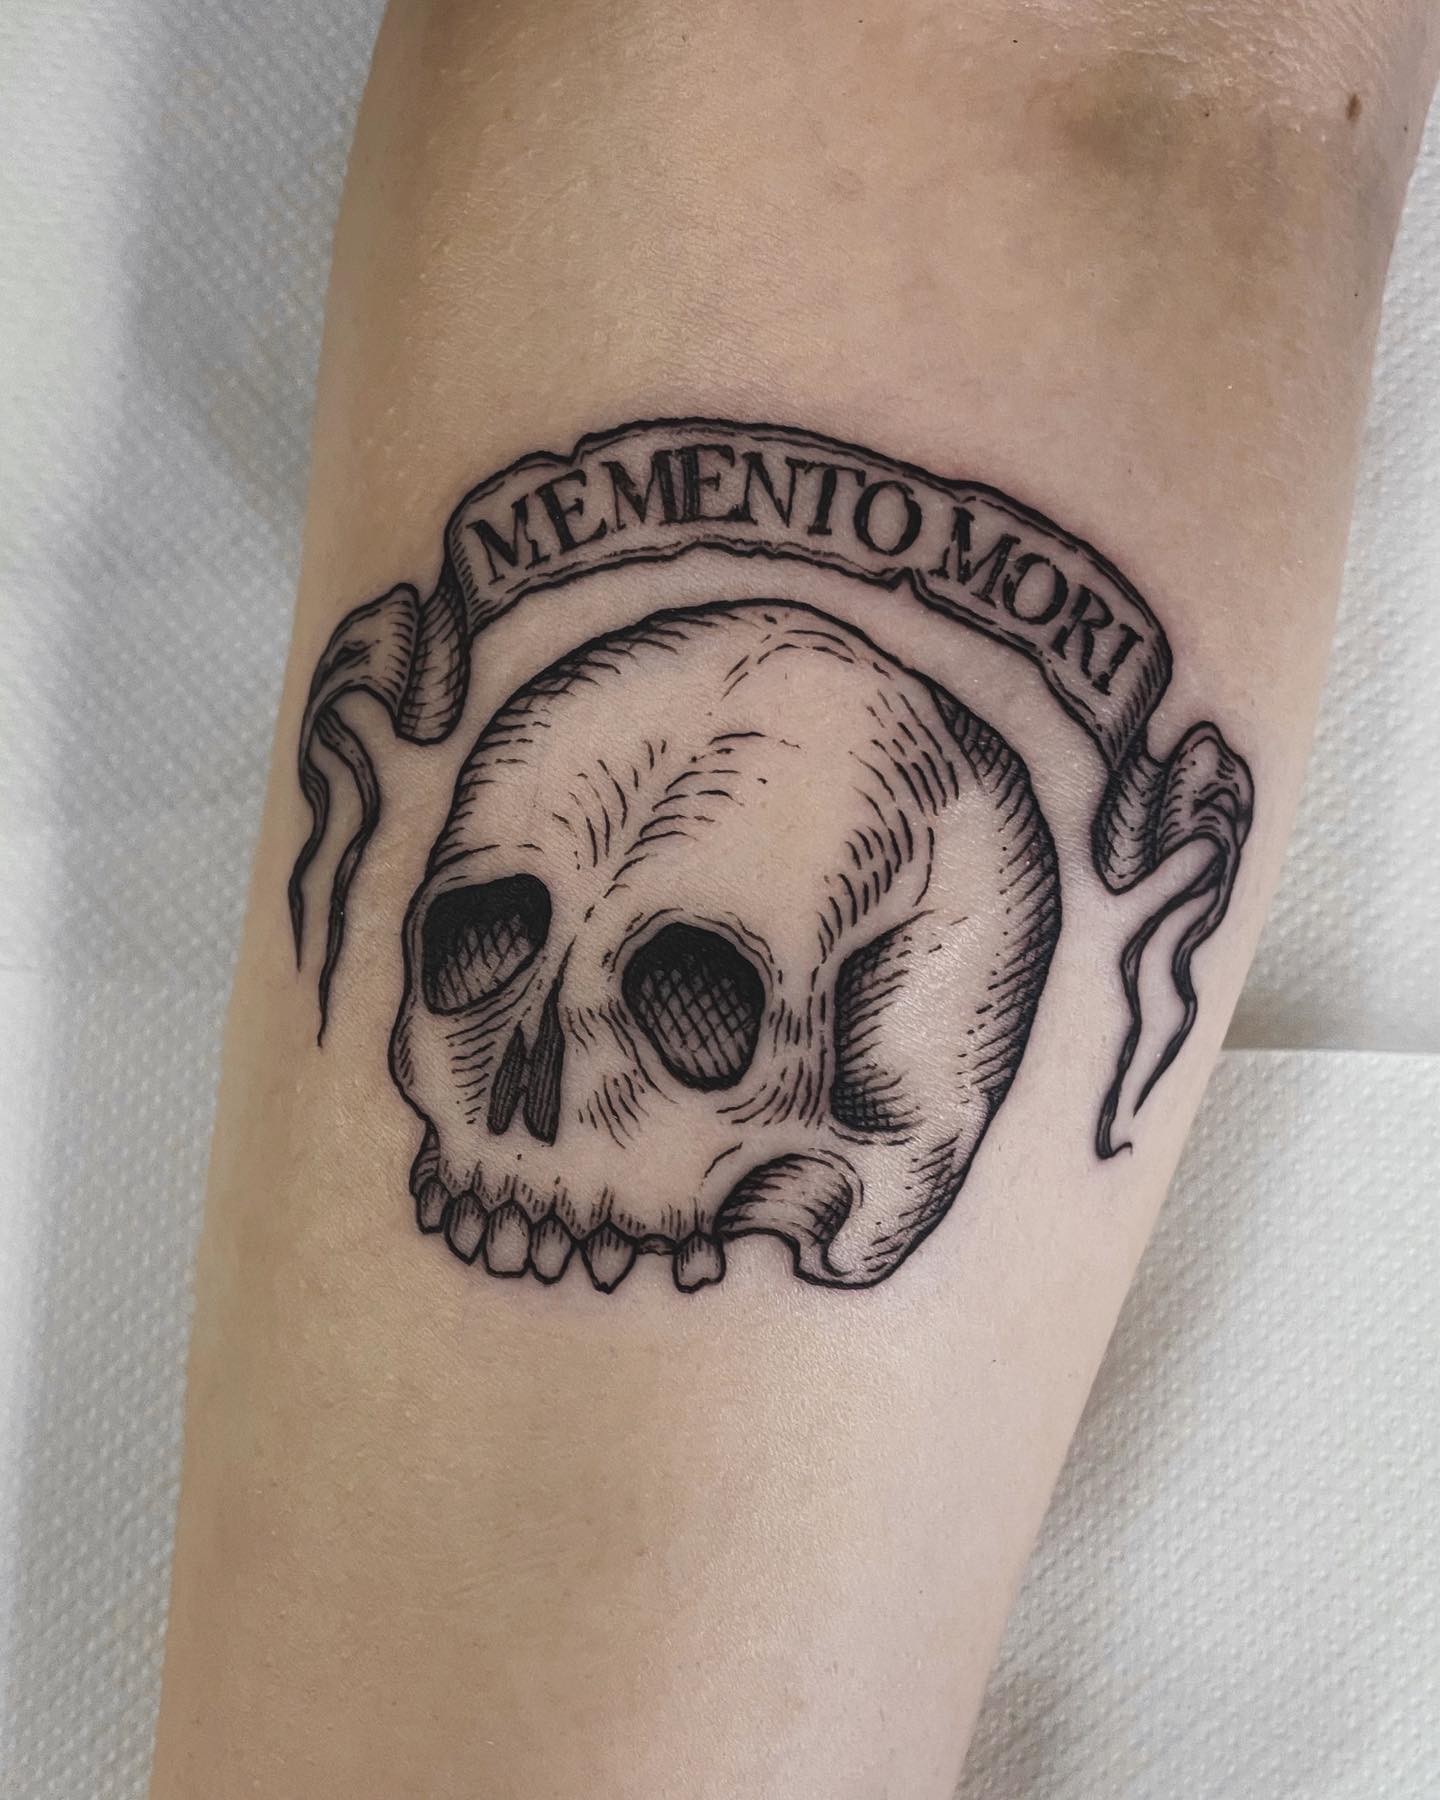 Tatuaje Memento Mori de tinta de cráneo.